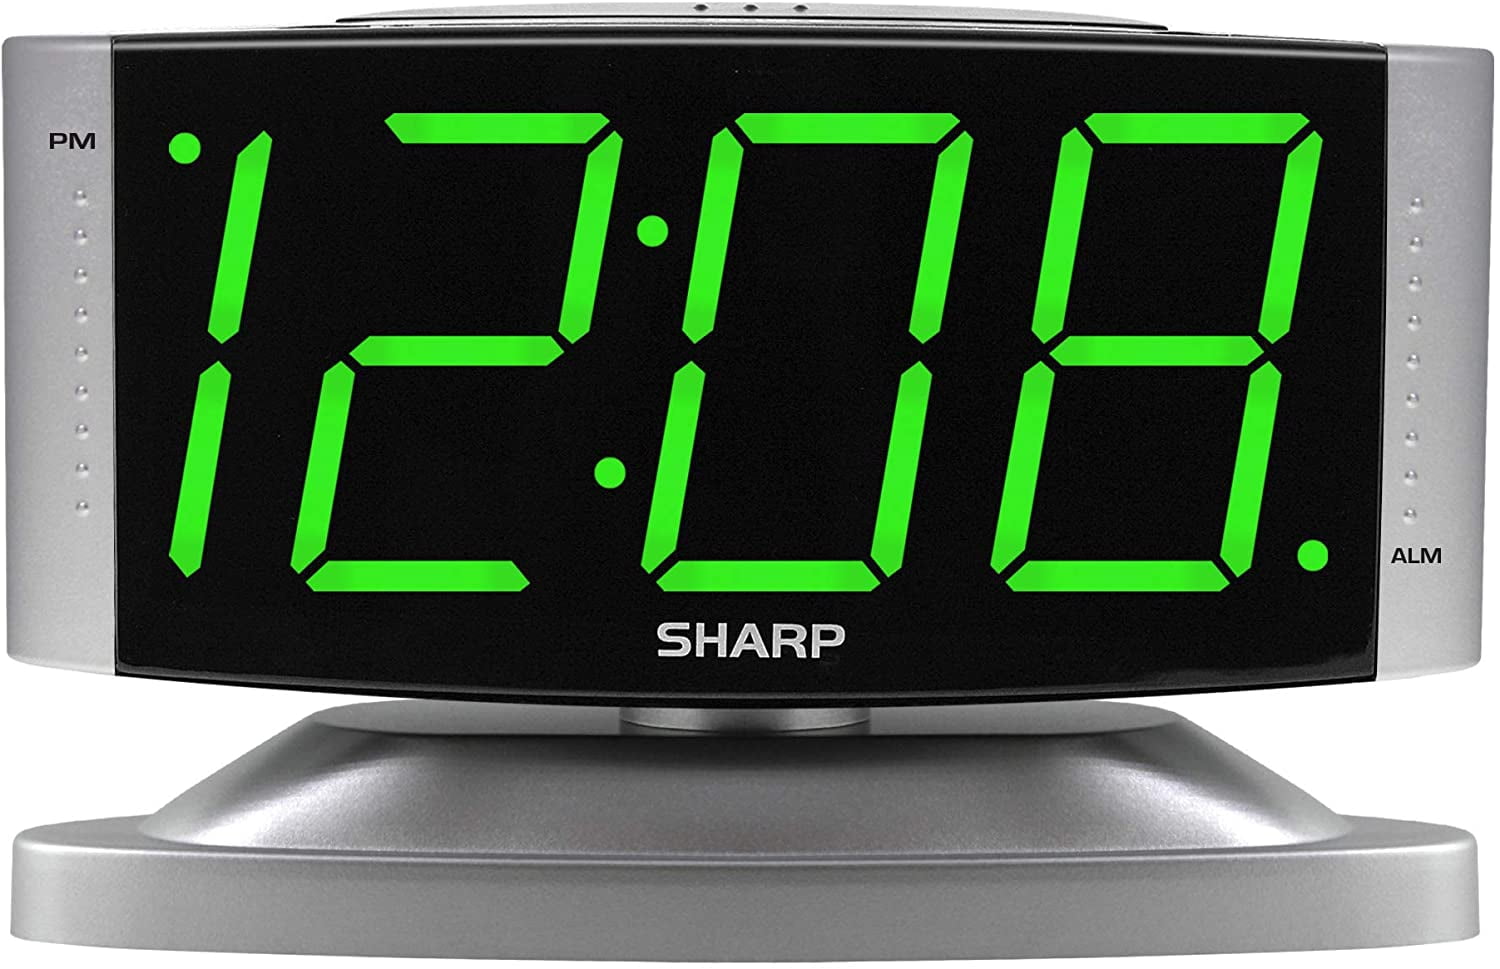 Yezyy LED Digital Alarm Clock Swivel Base Outlet Powered Simple Operation Dimmer Large Green Display - Walmart.com